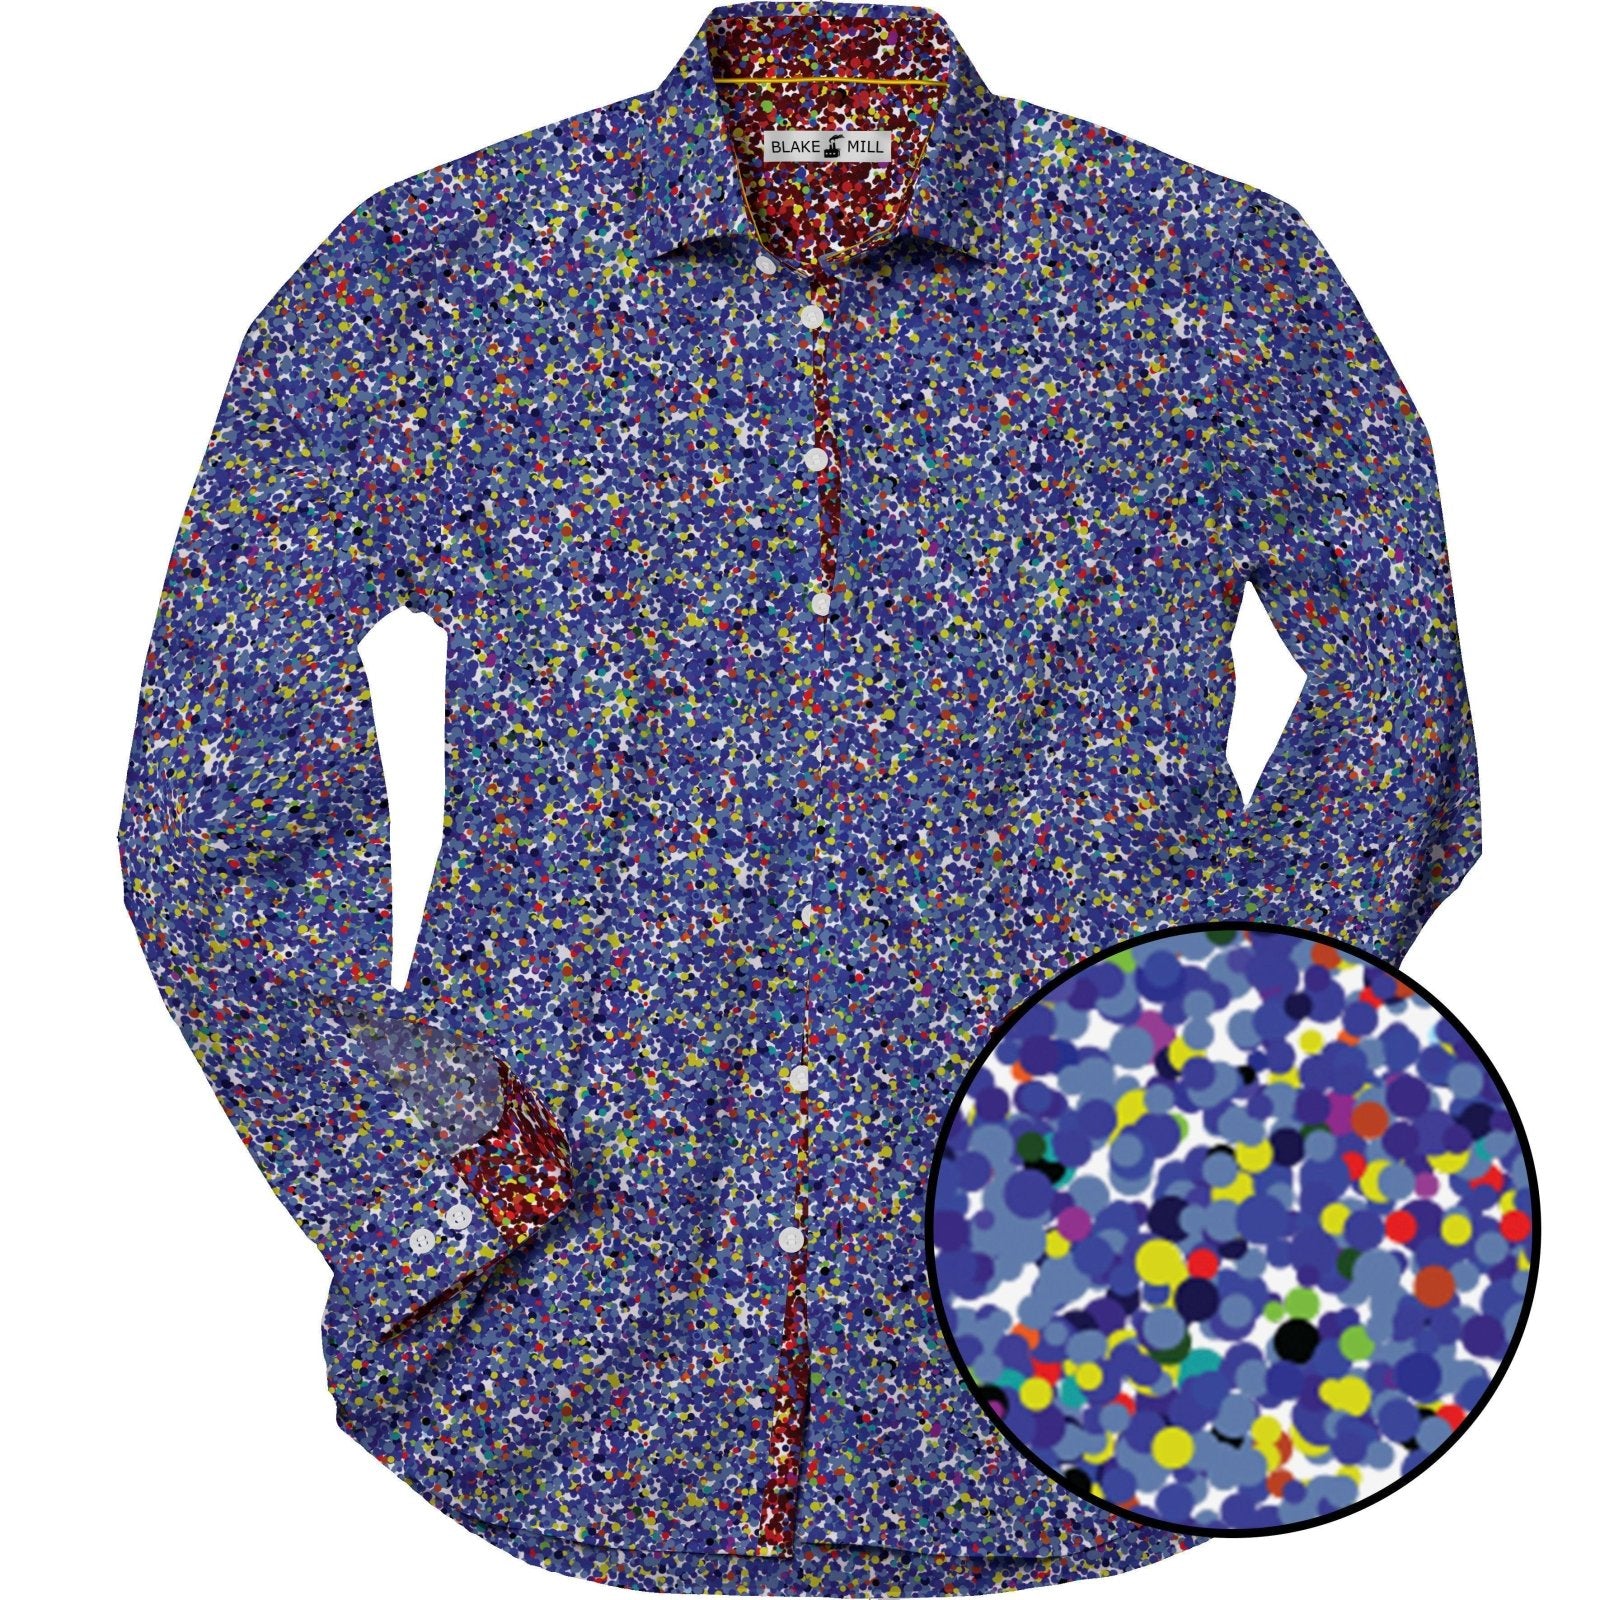 Dots Shirt - Blake Mill